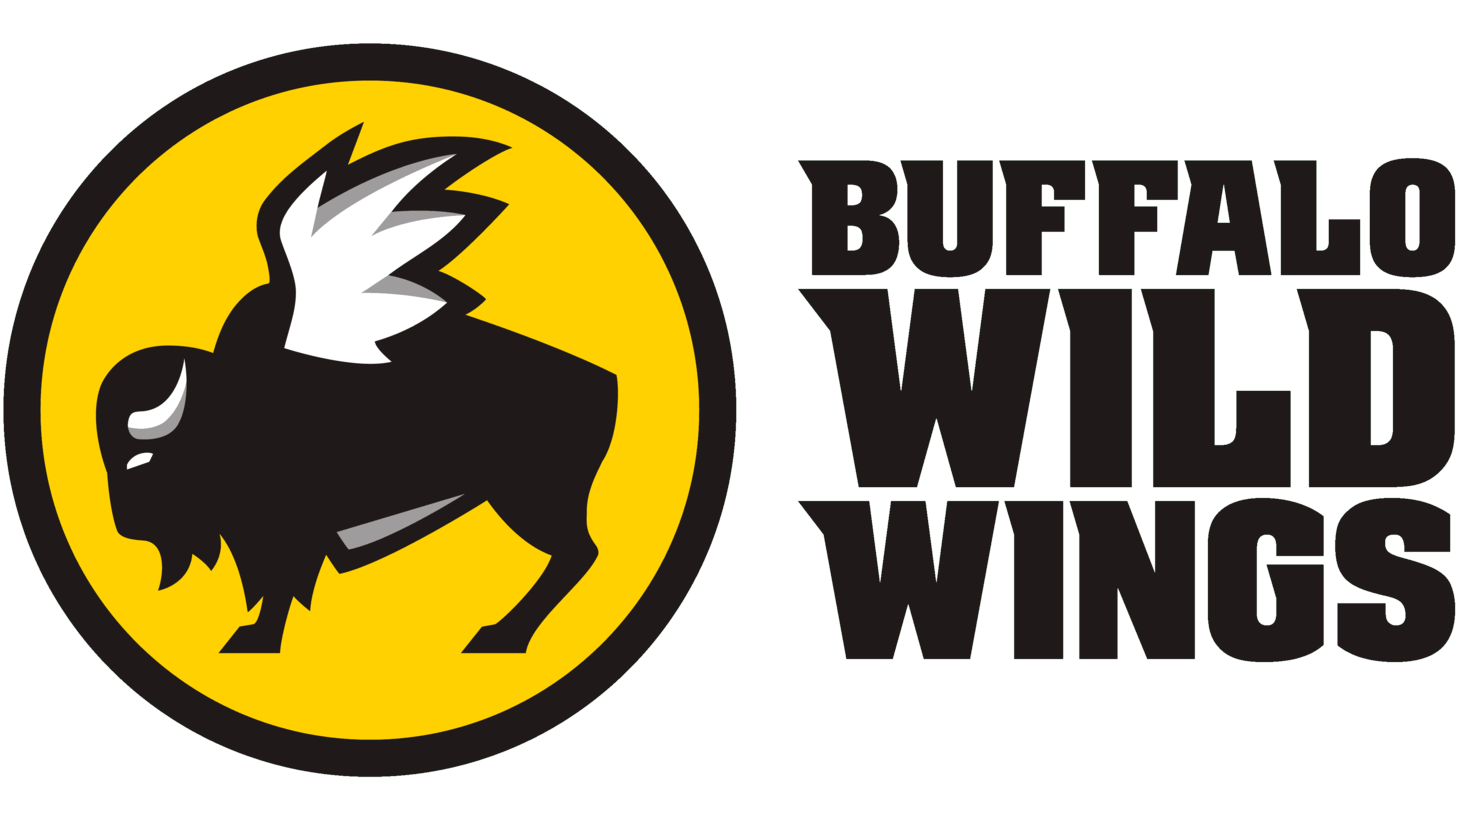 Buffalo wild wings sign 2012